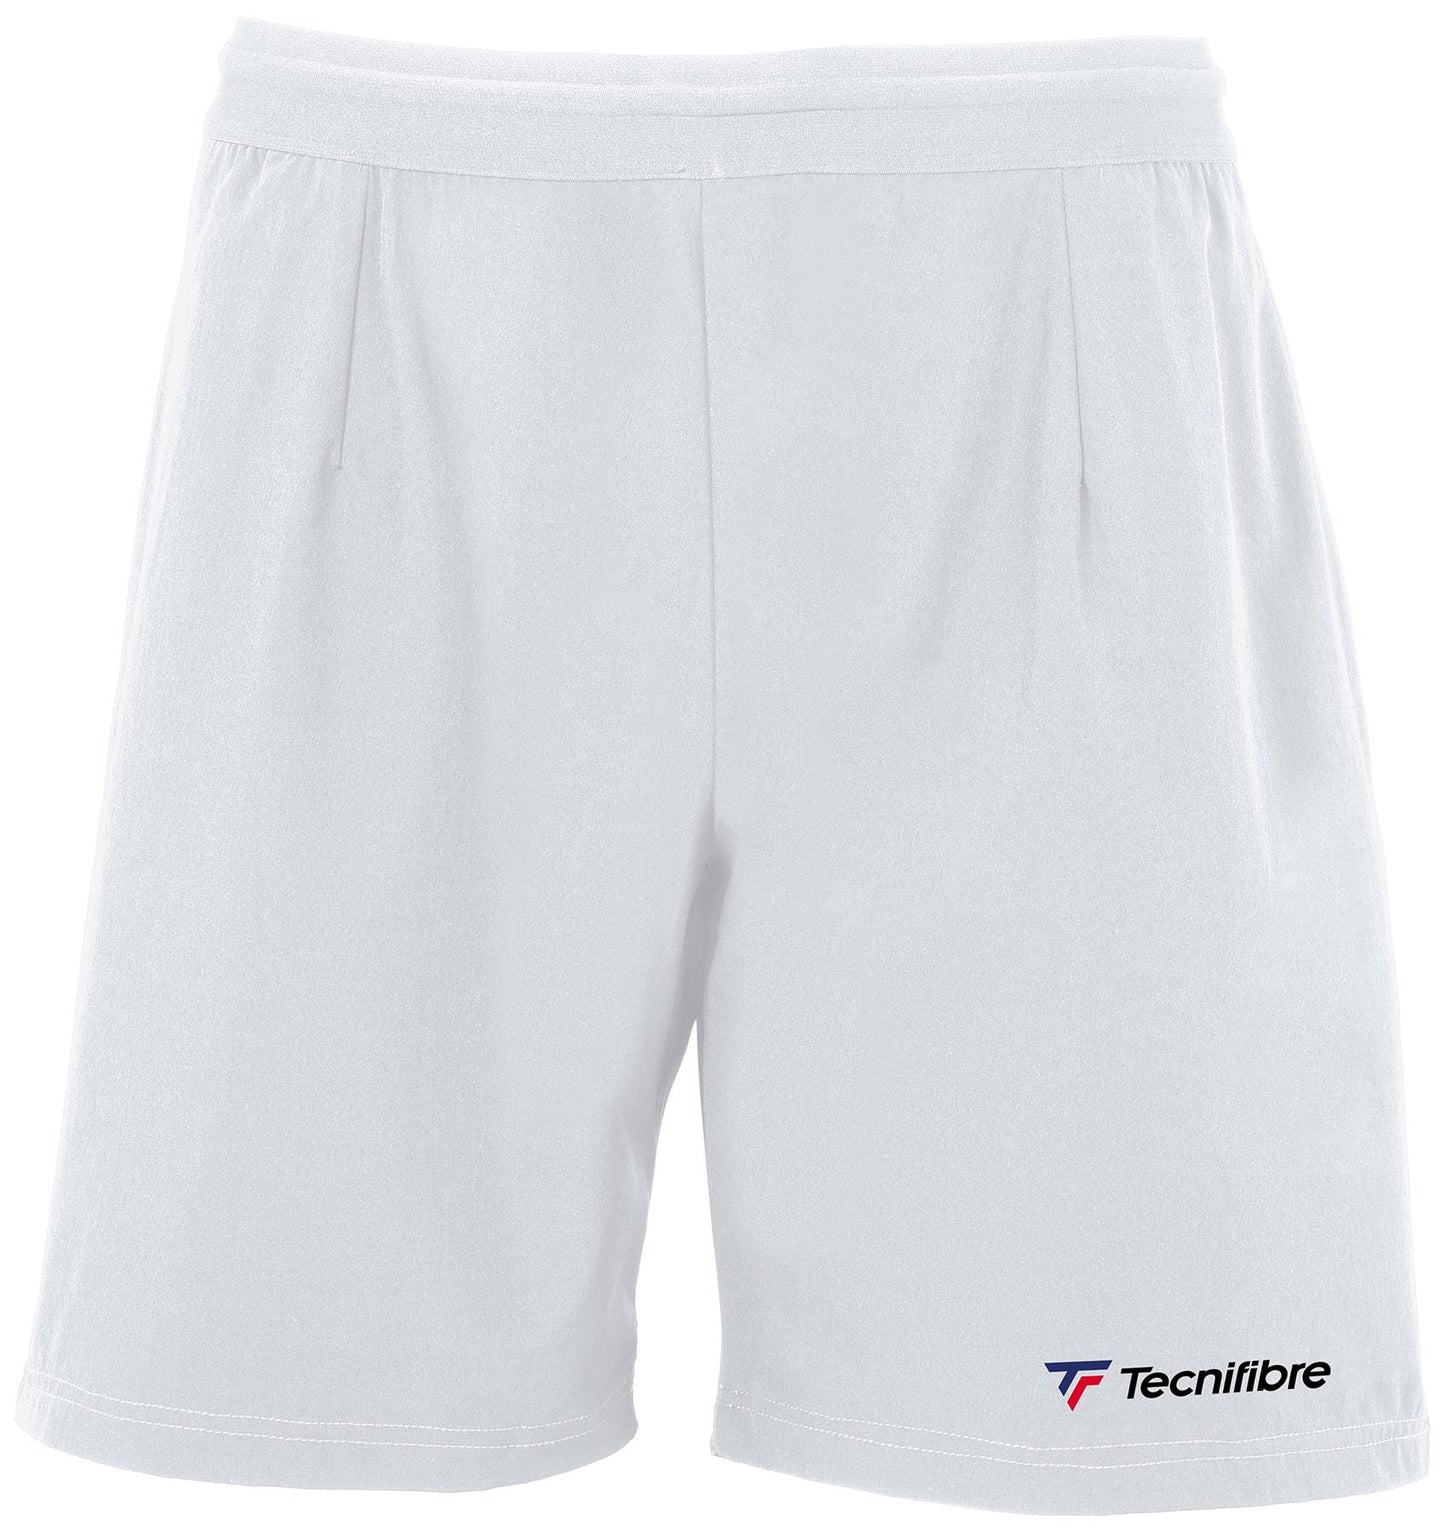 Tecnifibre Mens Stretch Shorts - White